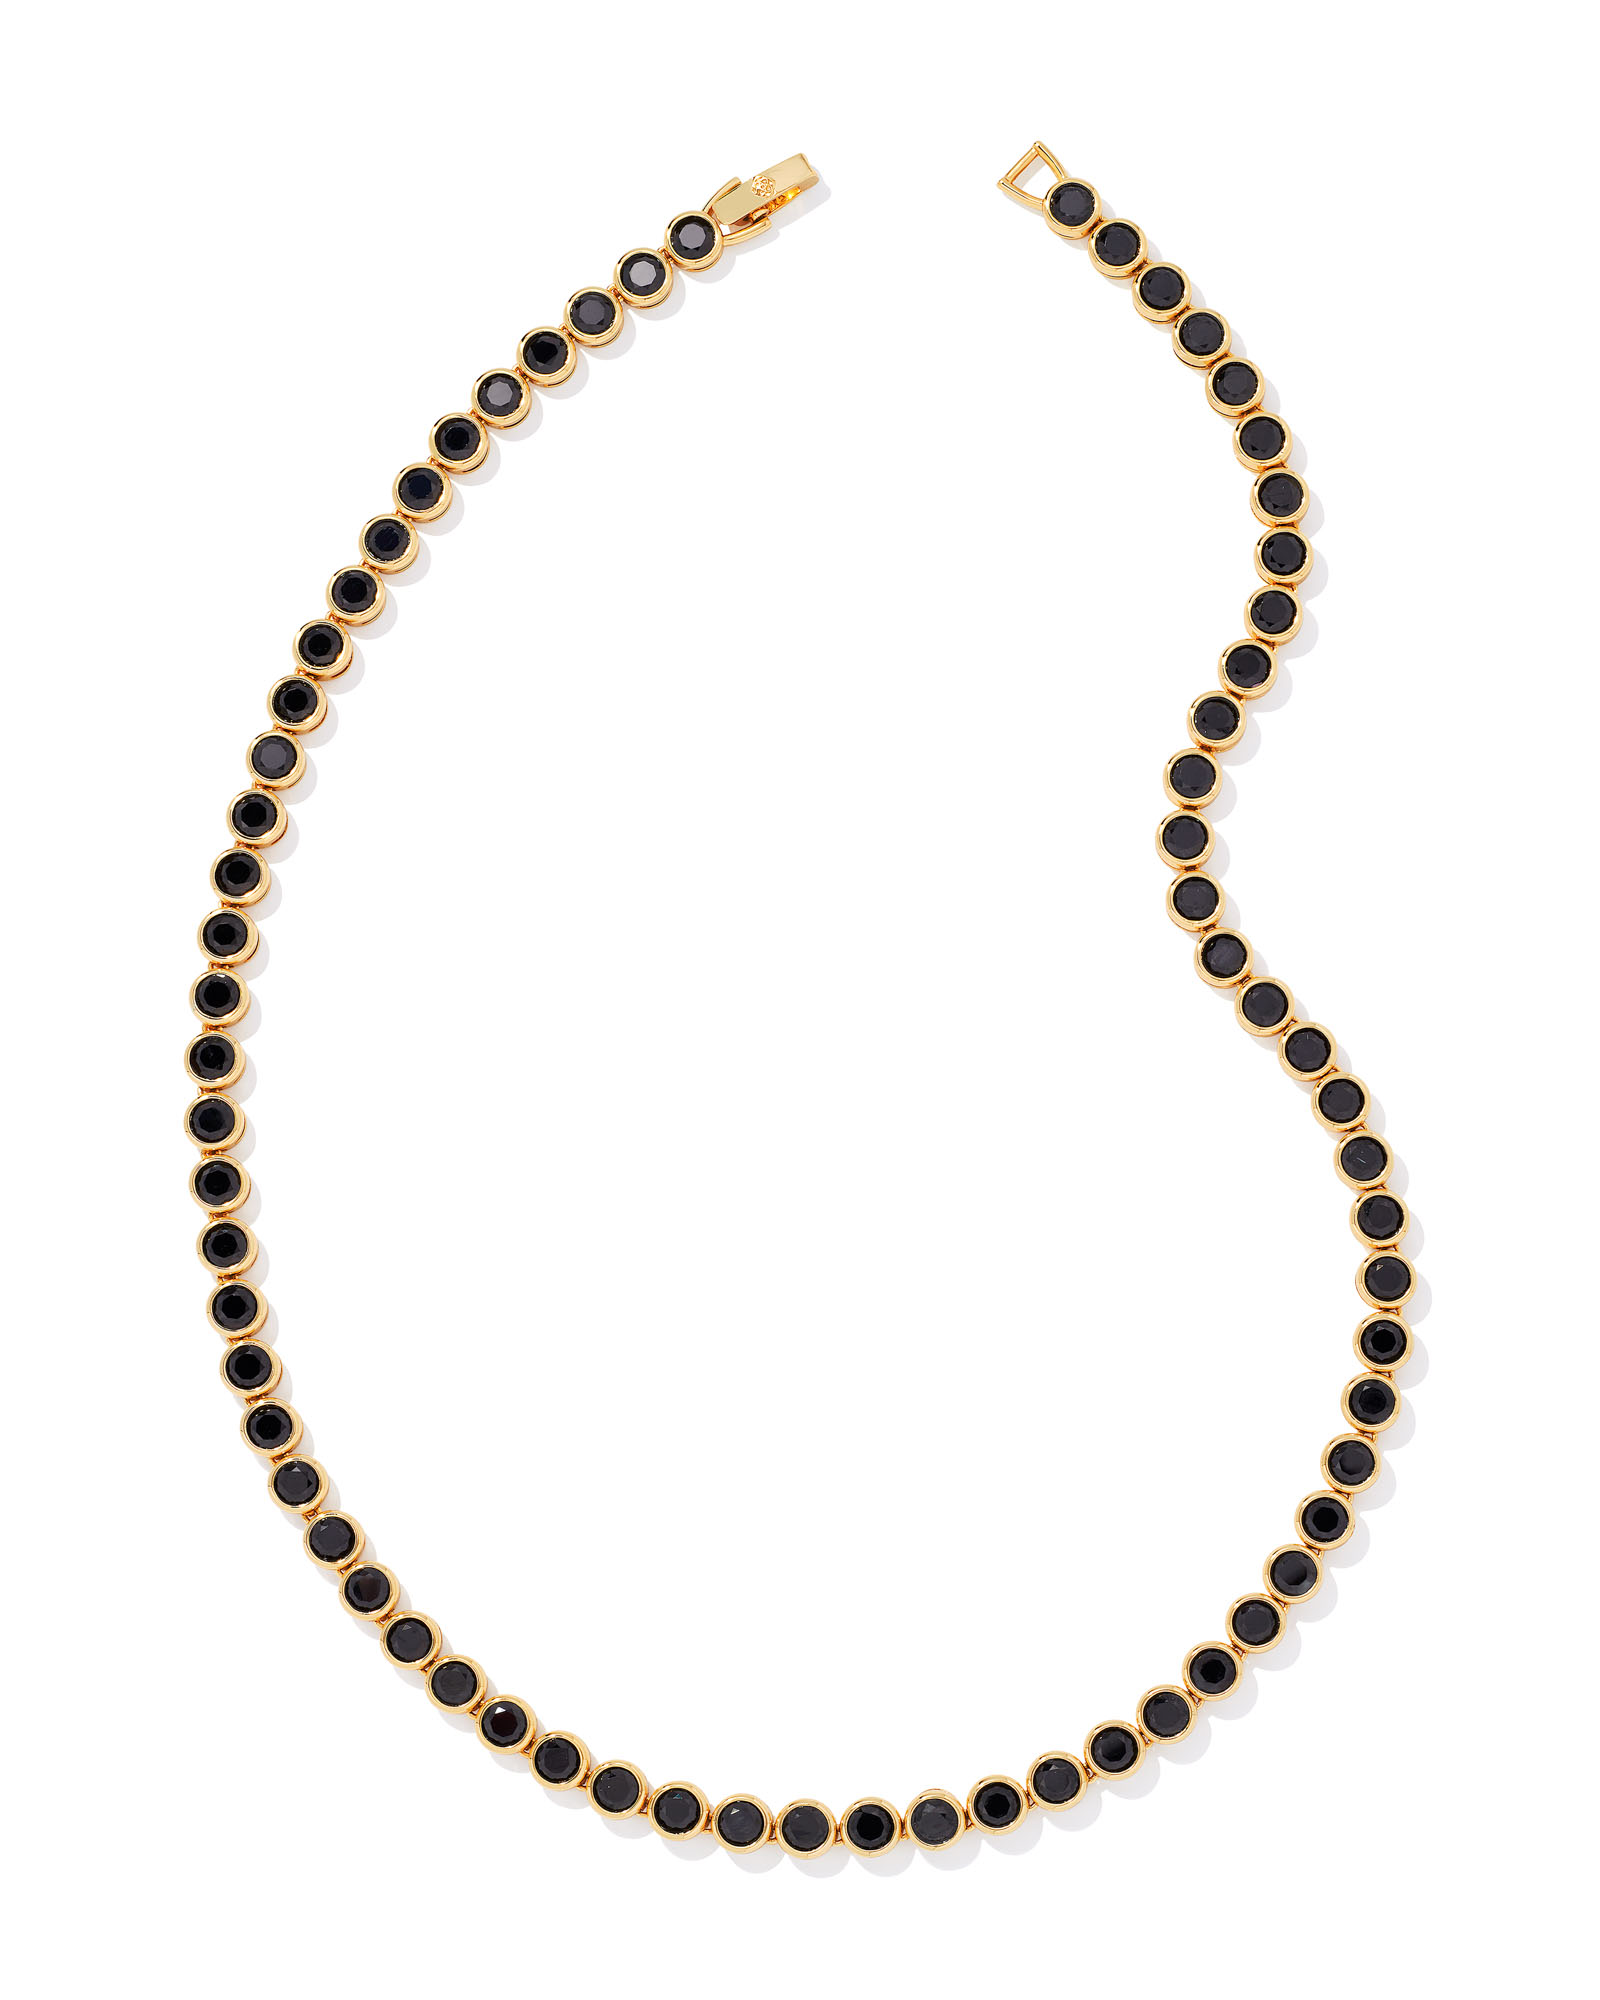 Carmen Gold Tennis Necklace in Black Spinel | Kendra Scott